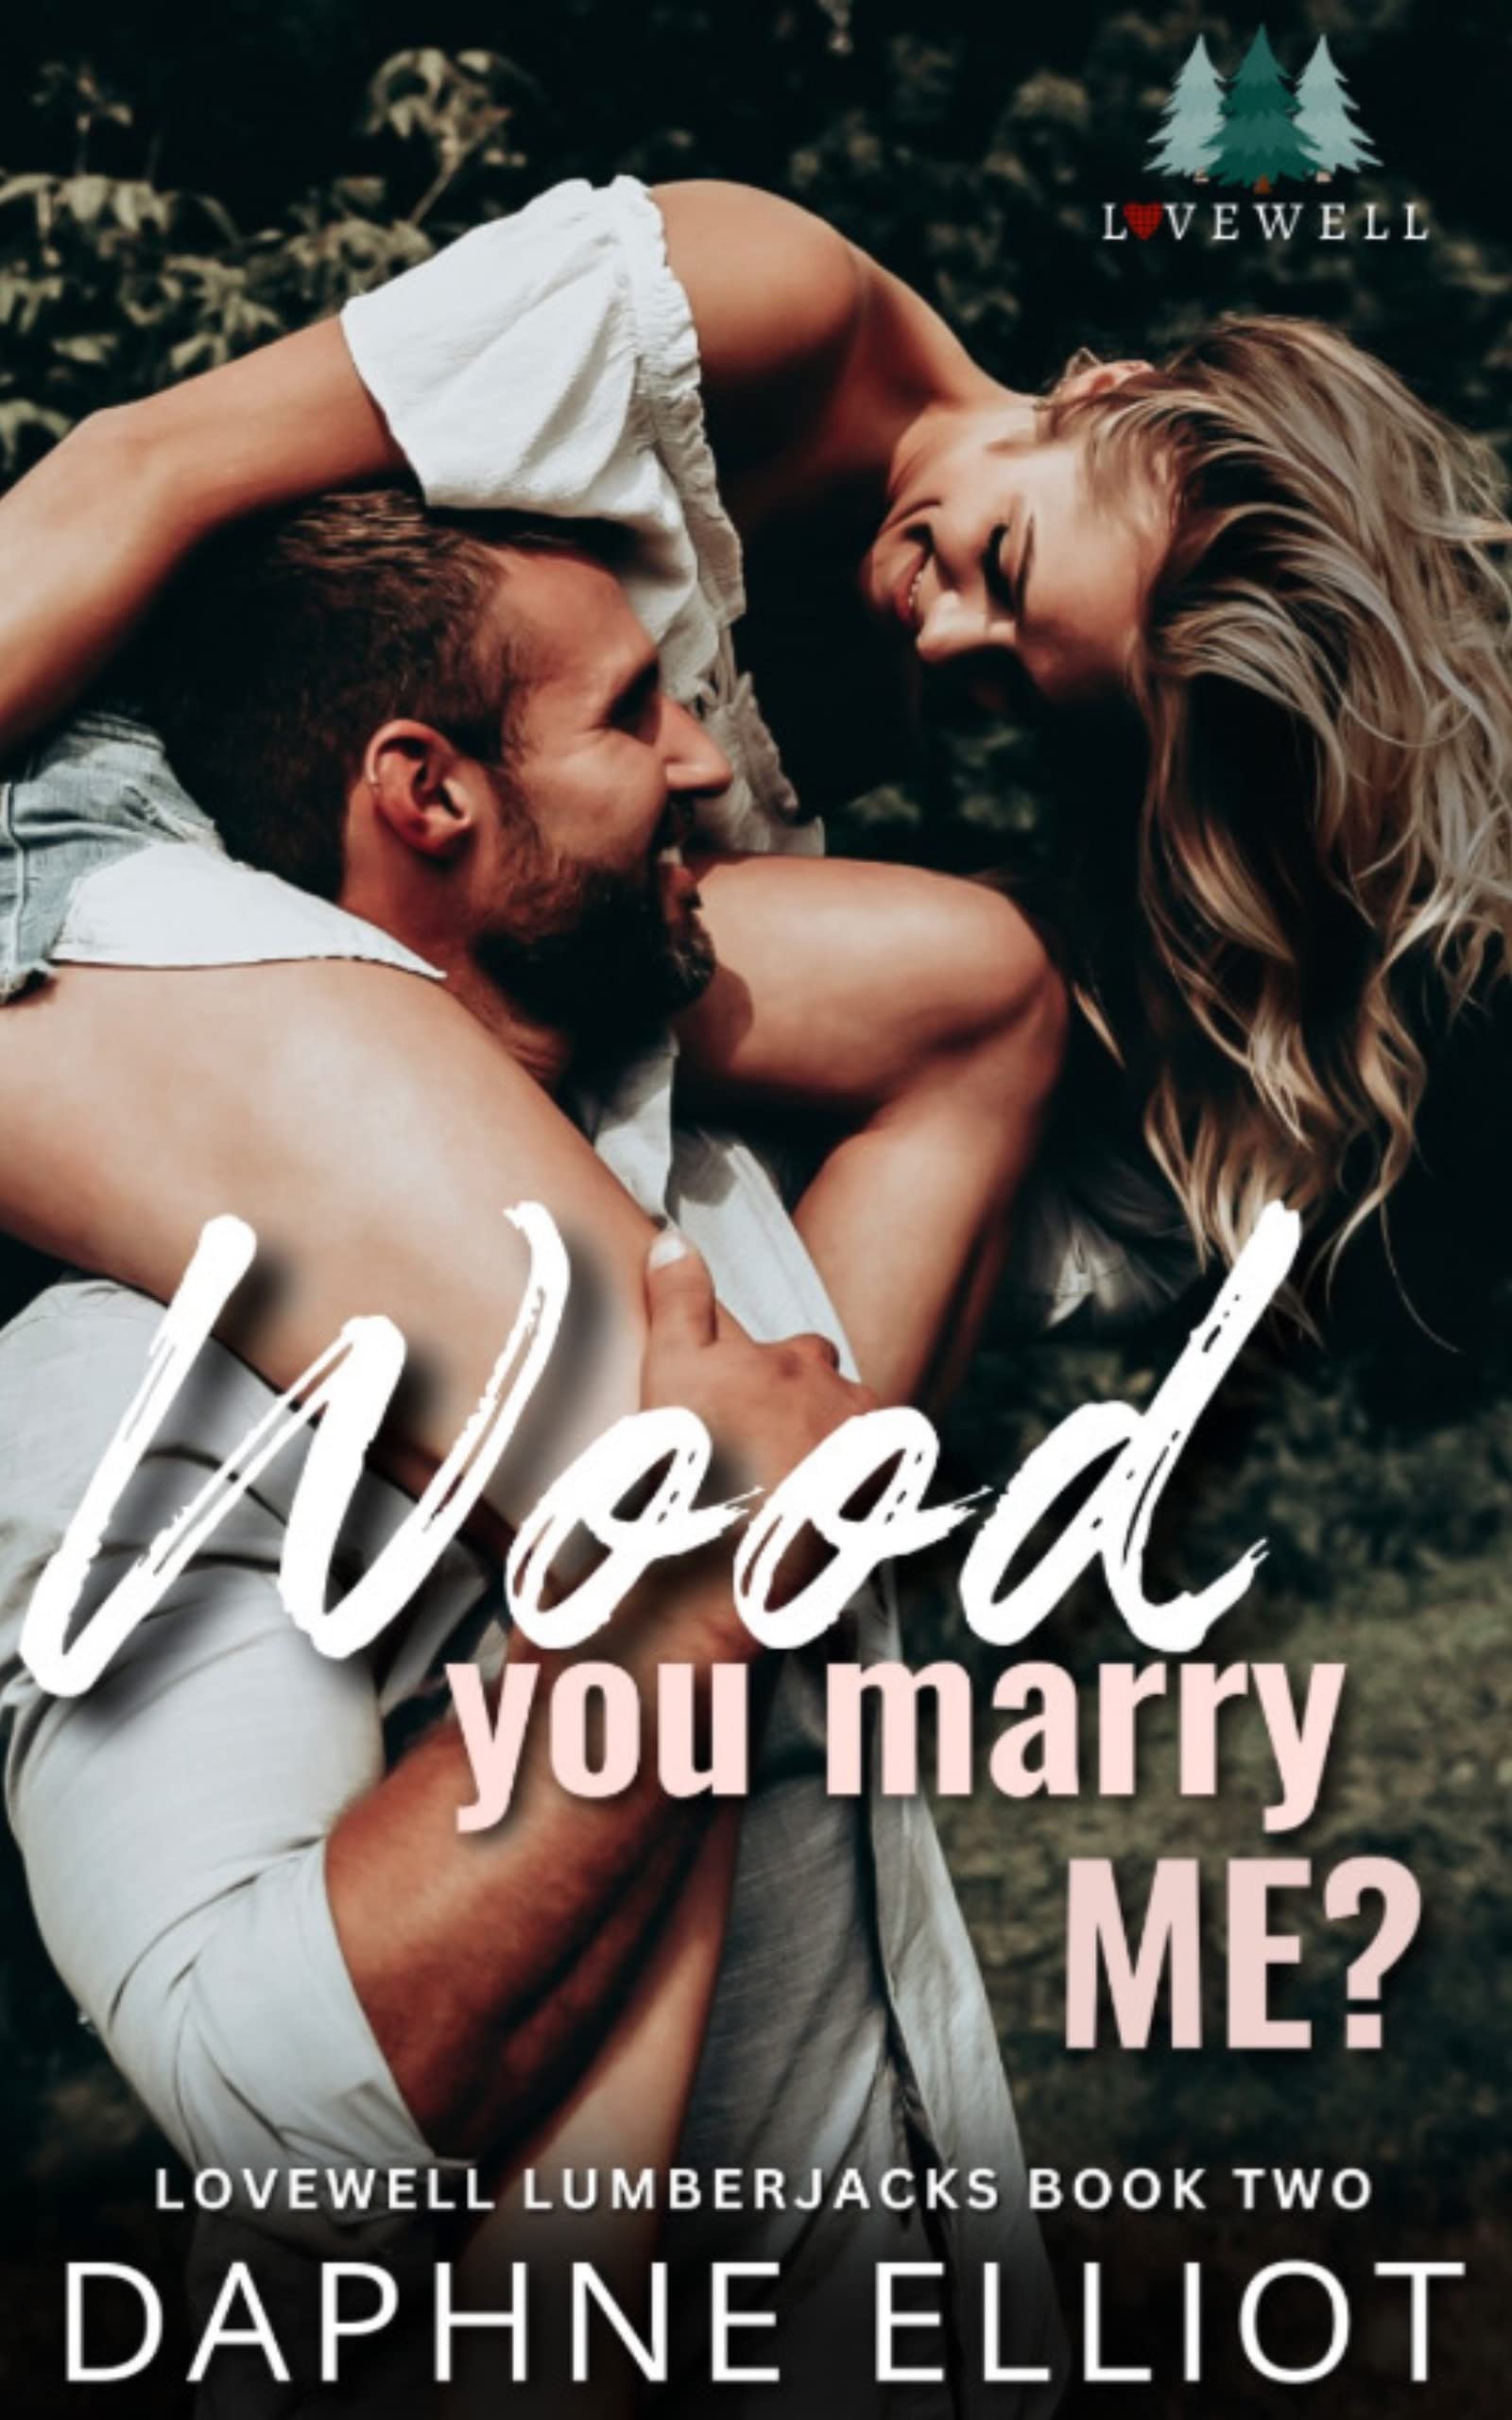 Wood You Marry Me? Daphne Elliot